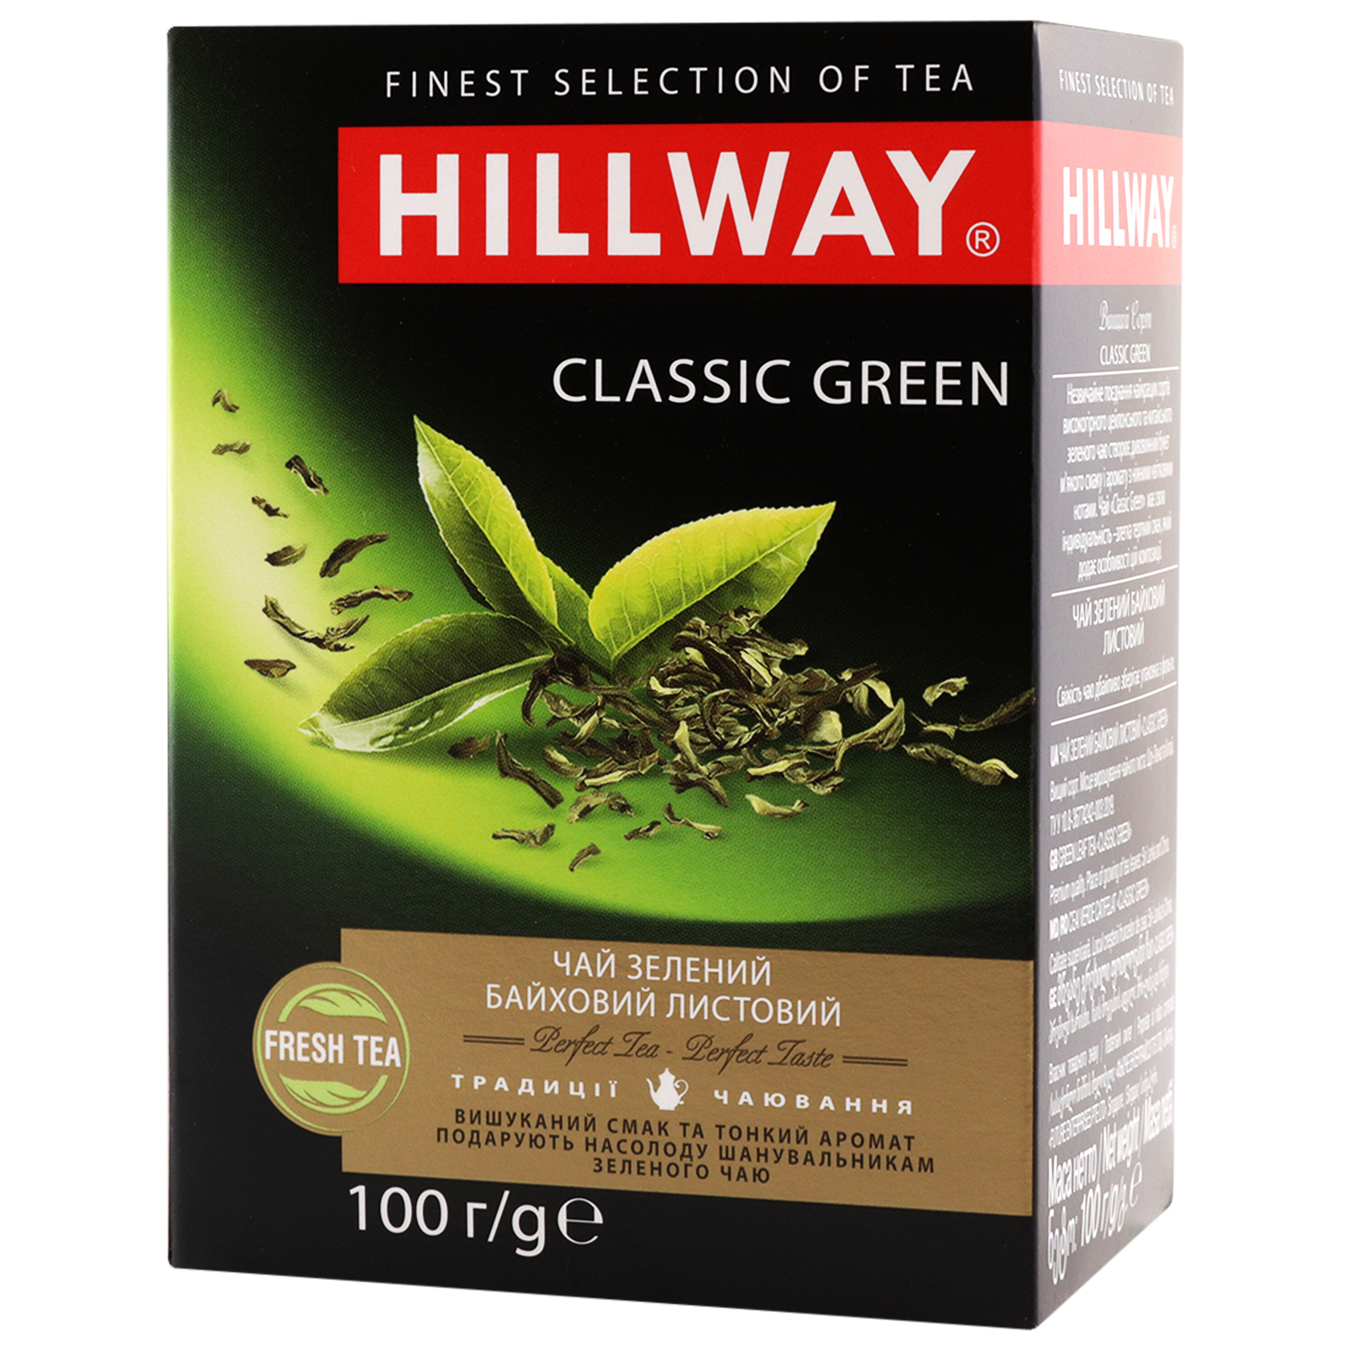 Hillway Classic Green Green Tea 100g